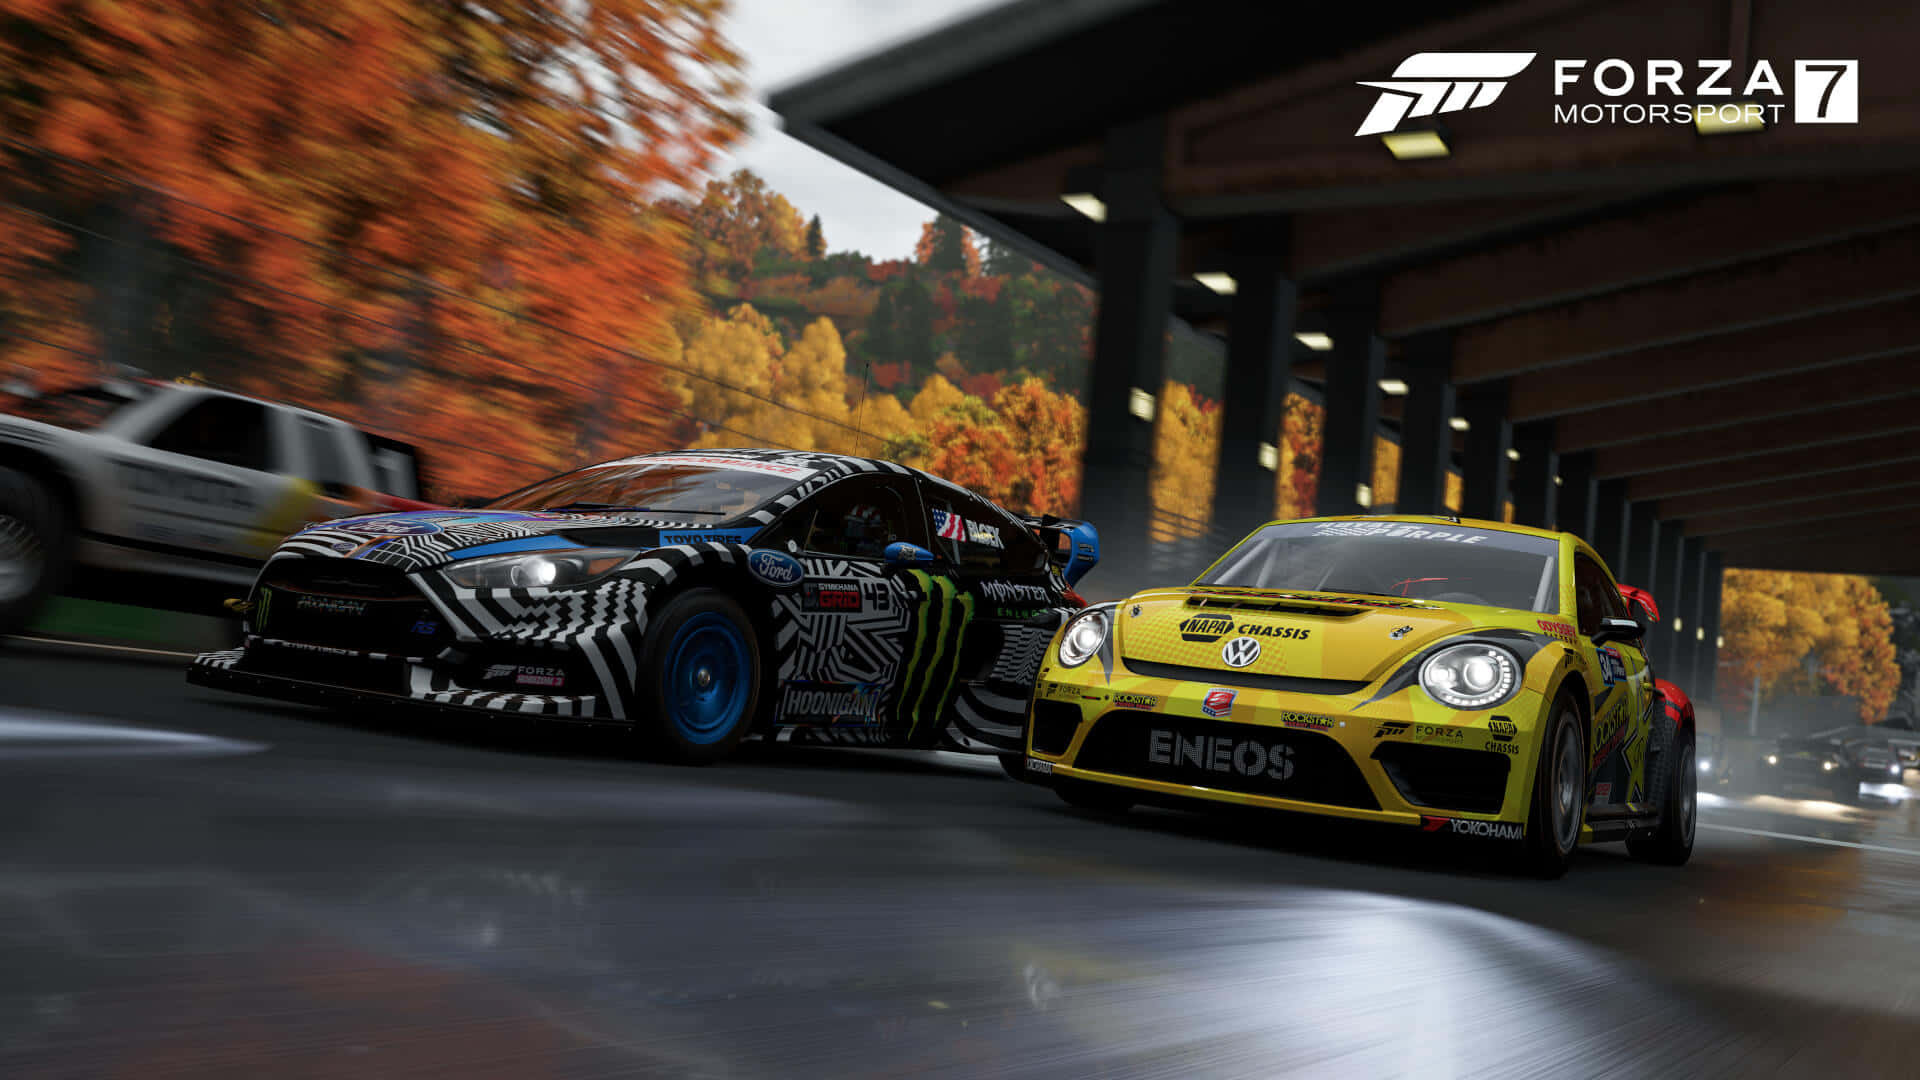 1920x1080 Forza Motorsport 7 Background 1920 X 1080 Background